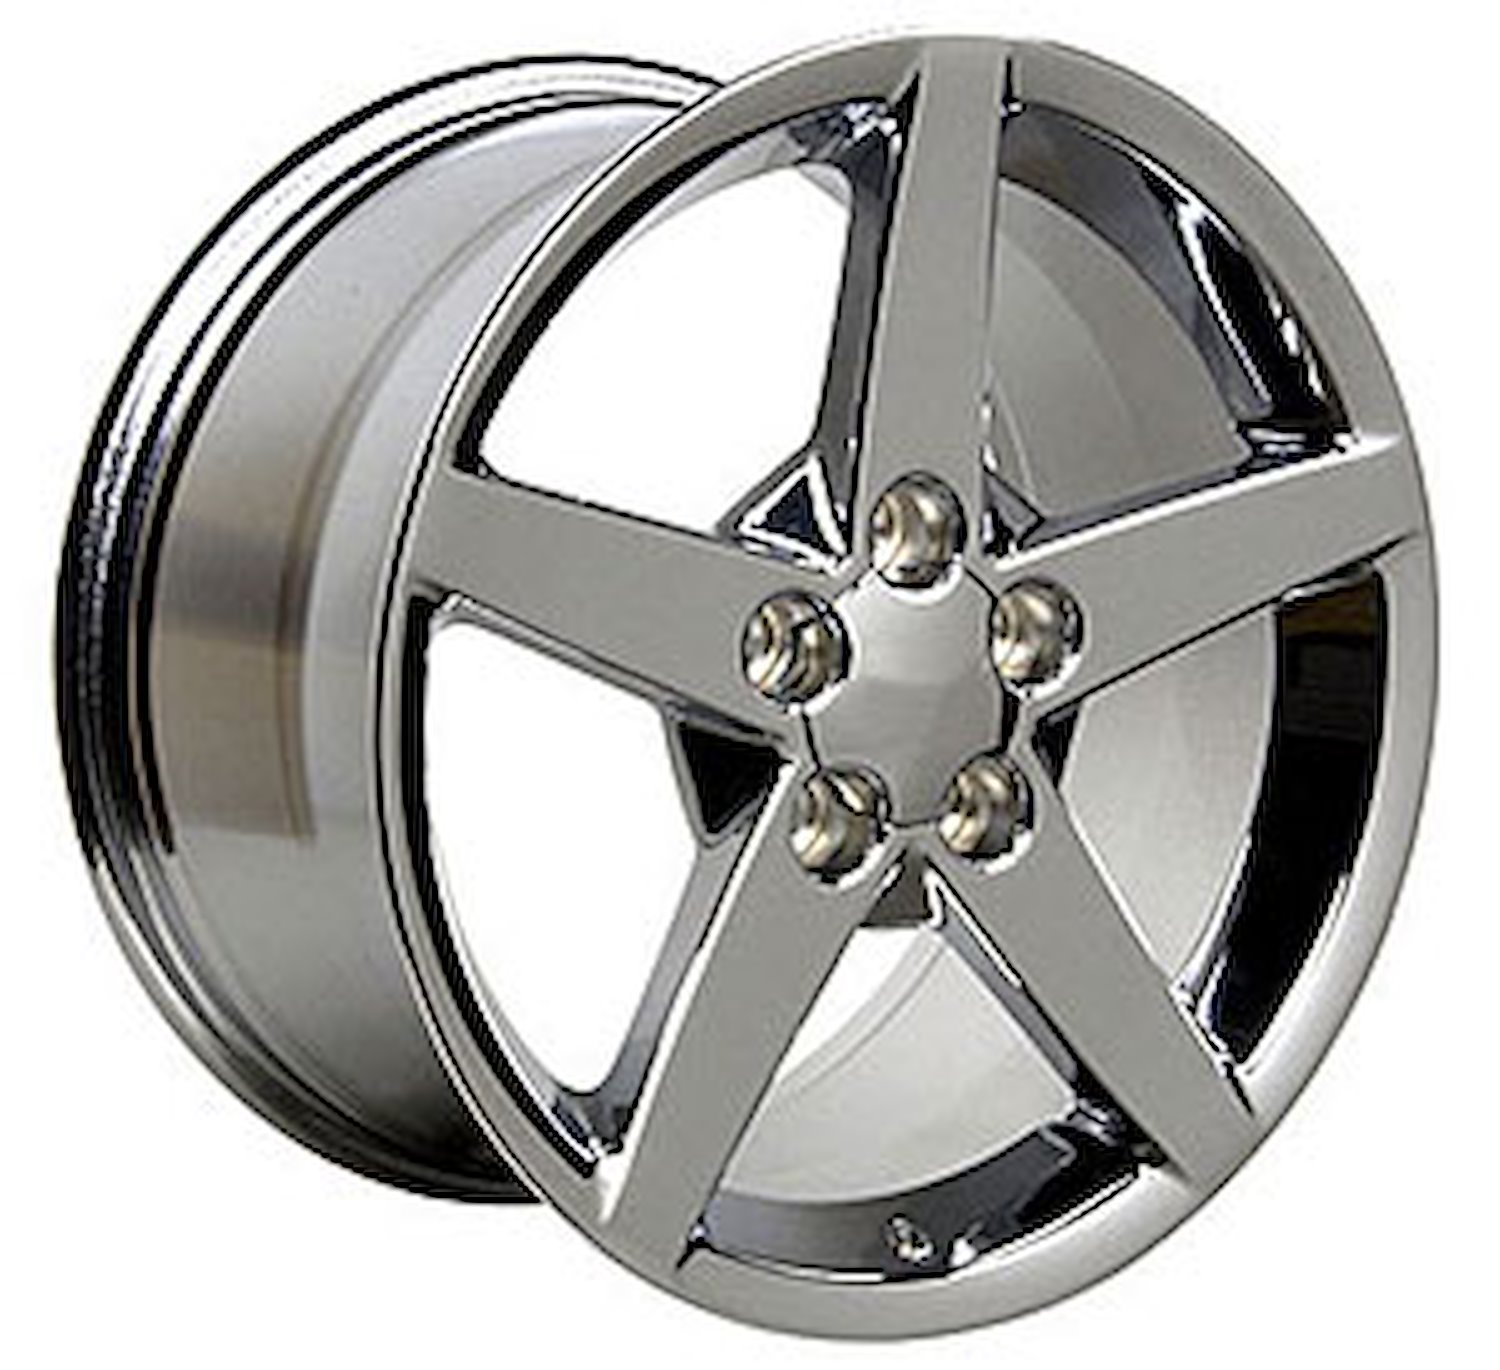 Corvette C6 Style Wheel Size: 17" x 9.5" Bolt Pattern: 5 x 120.7 Rear Spacing: 7.38" Offset: +54mm